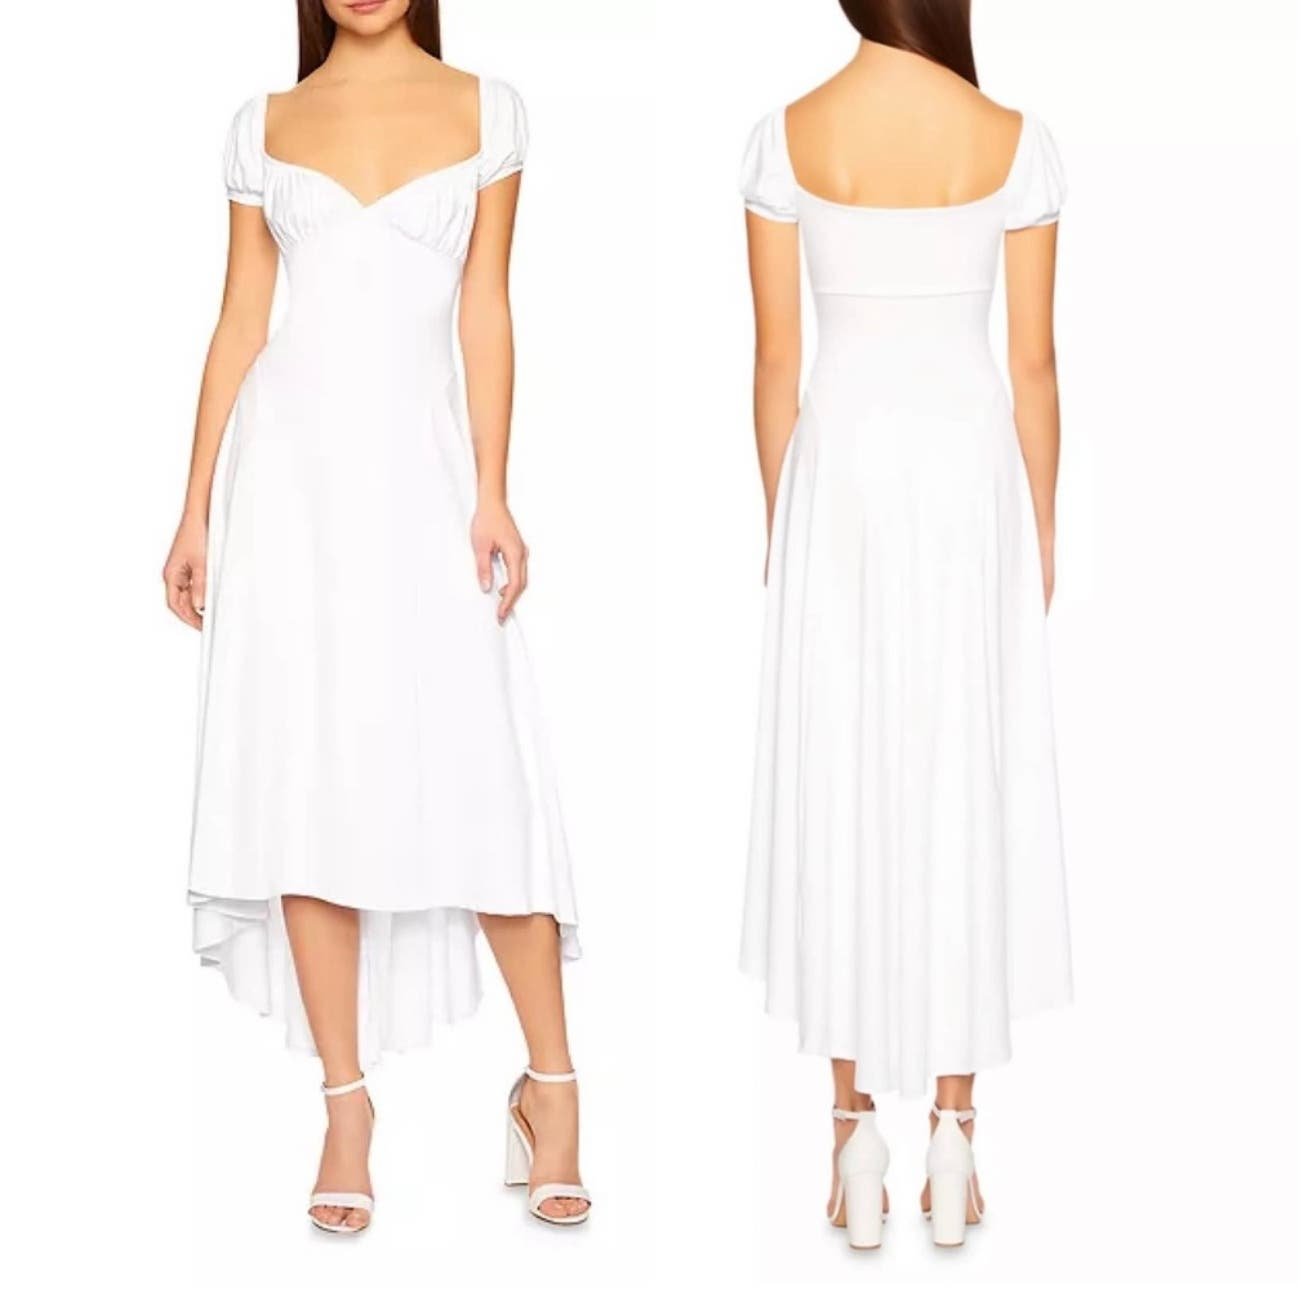 large selection Susana Monaco Sugar White Puff Sleeve Shoulder High Low Midi Dress Small $198.00 MQJz0eKYc Buying Cheap